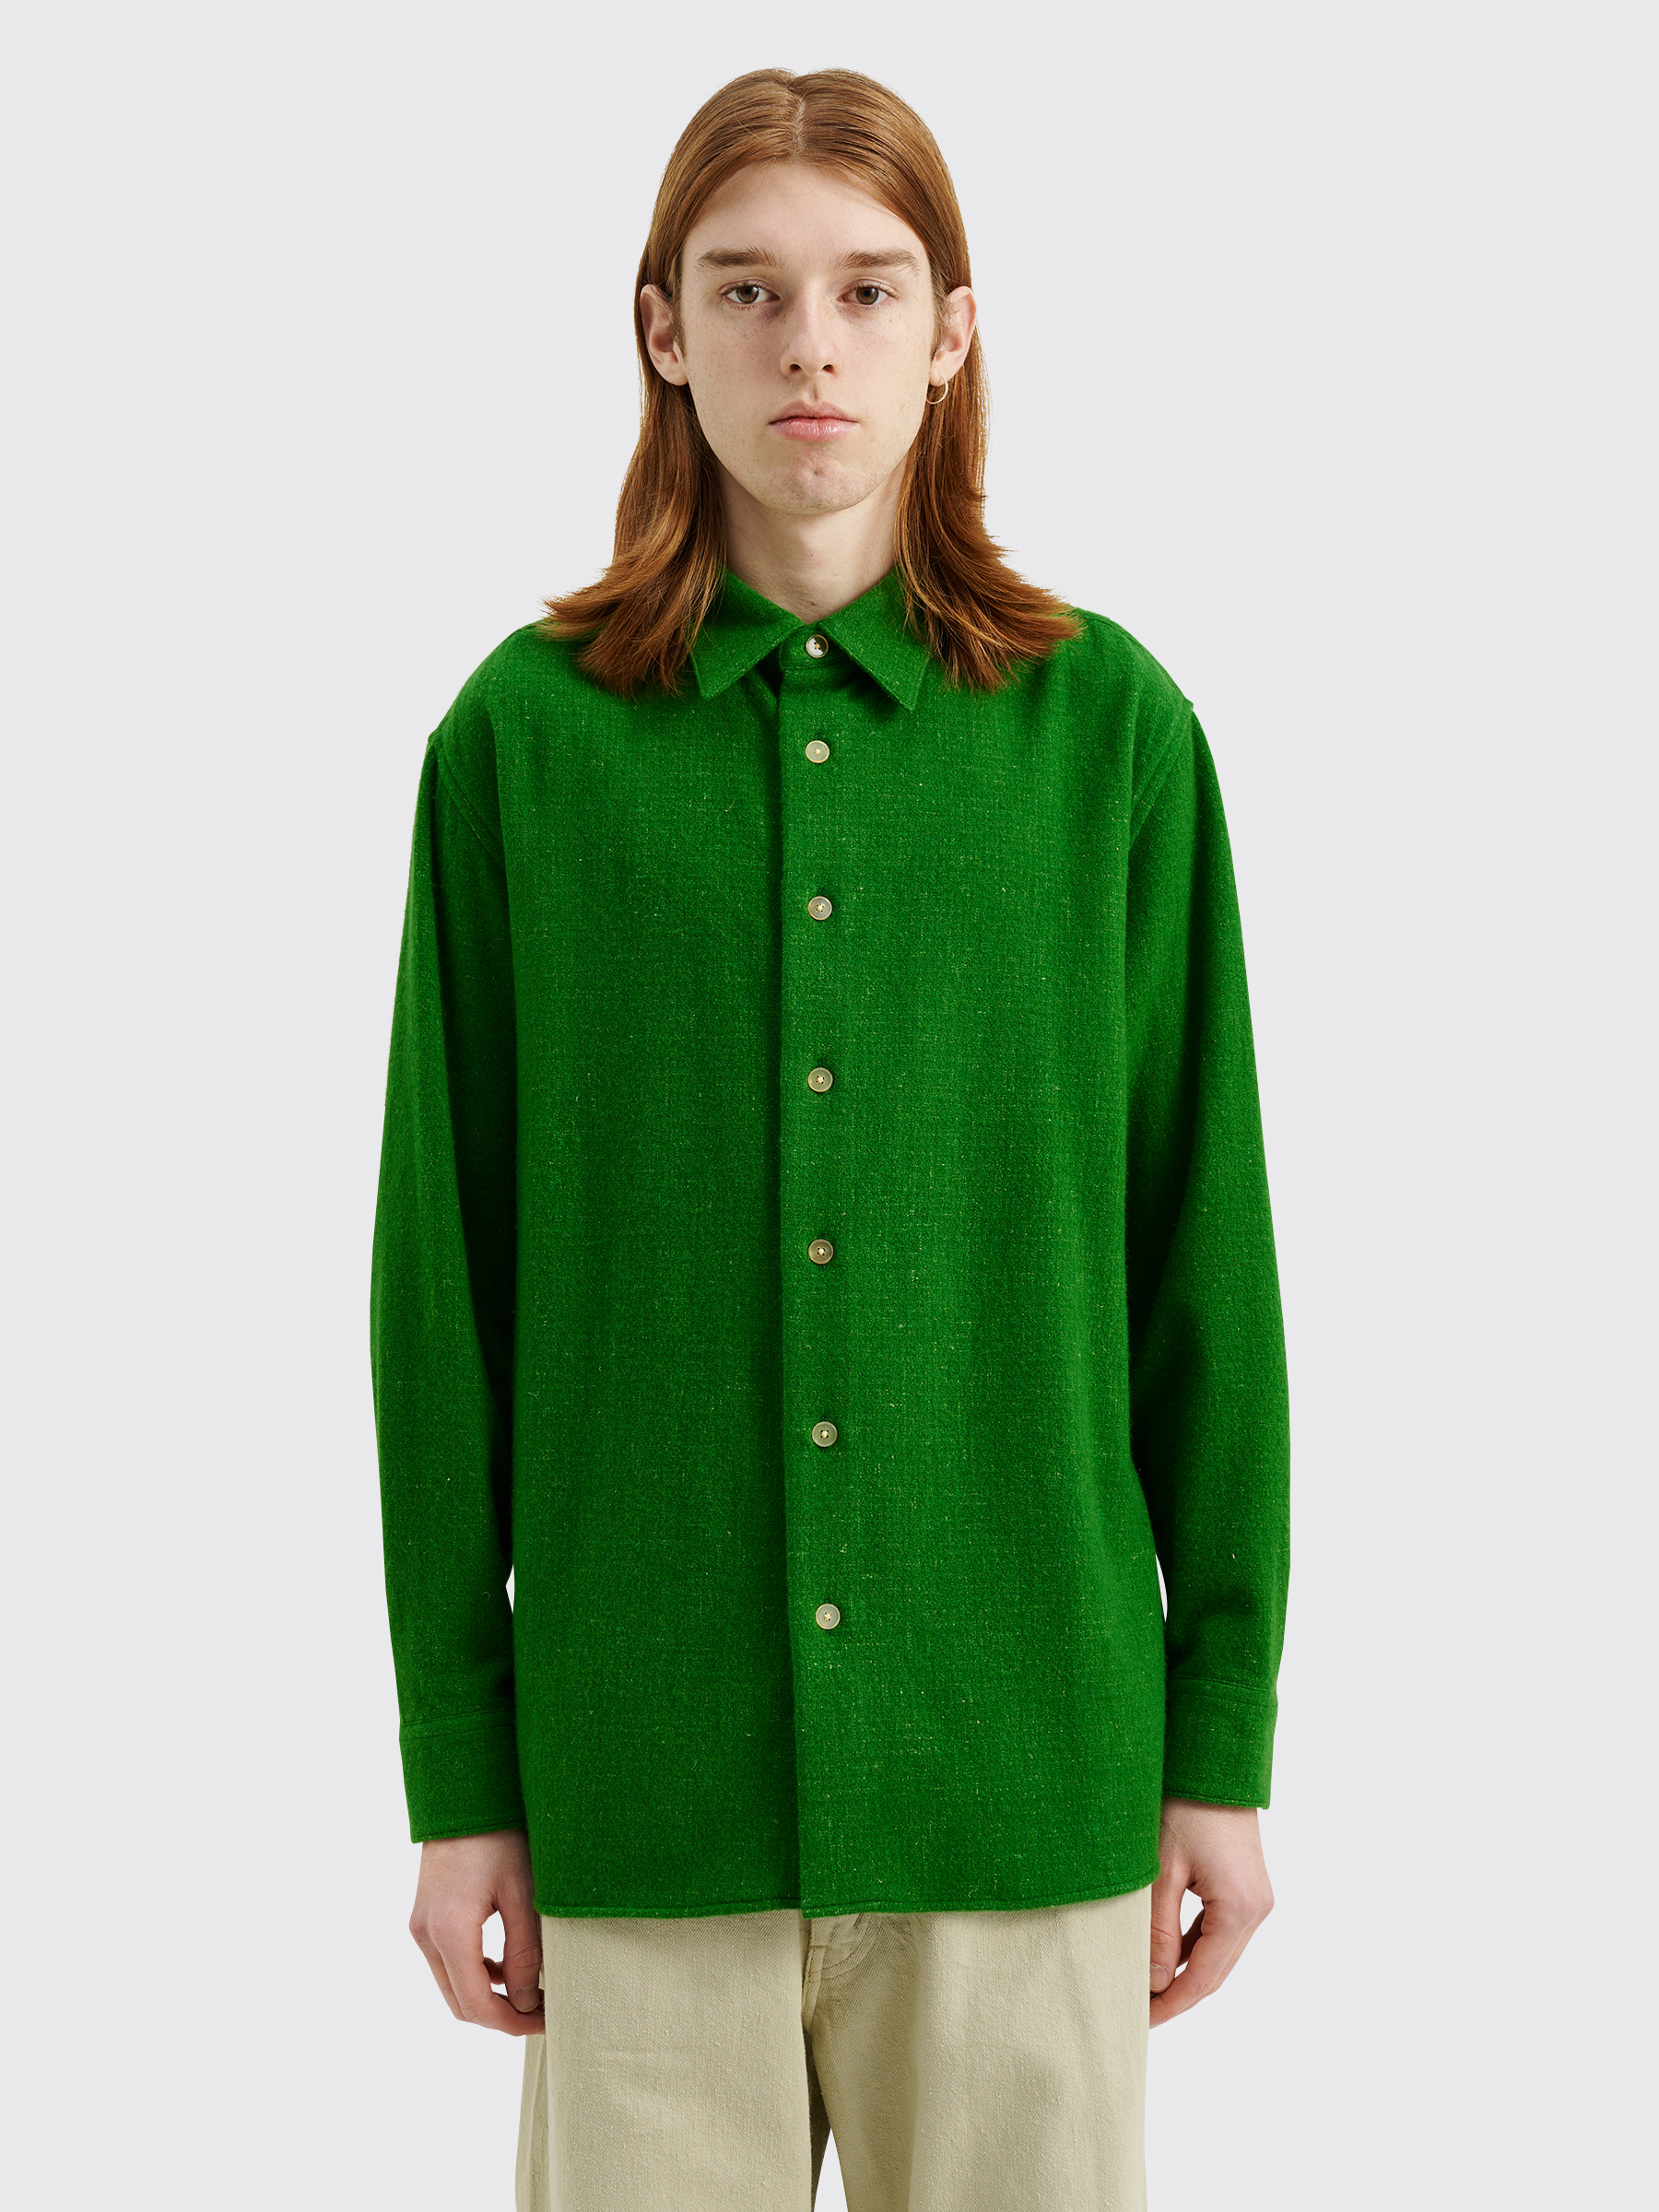 Auralee wool cashmere light tweed shirt シャツ トップス メンズ レビュー高評価の商品